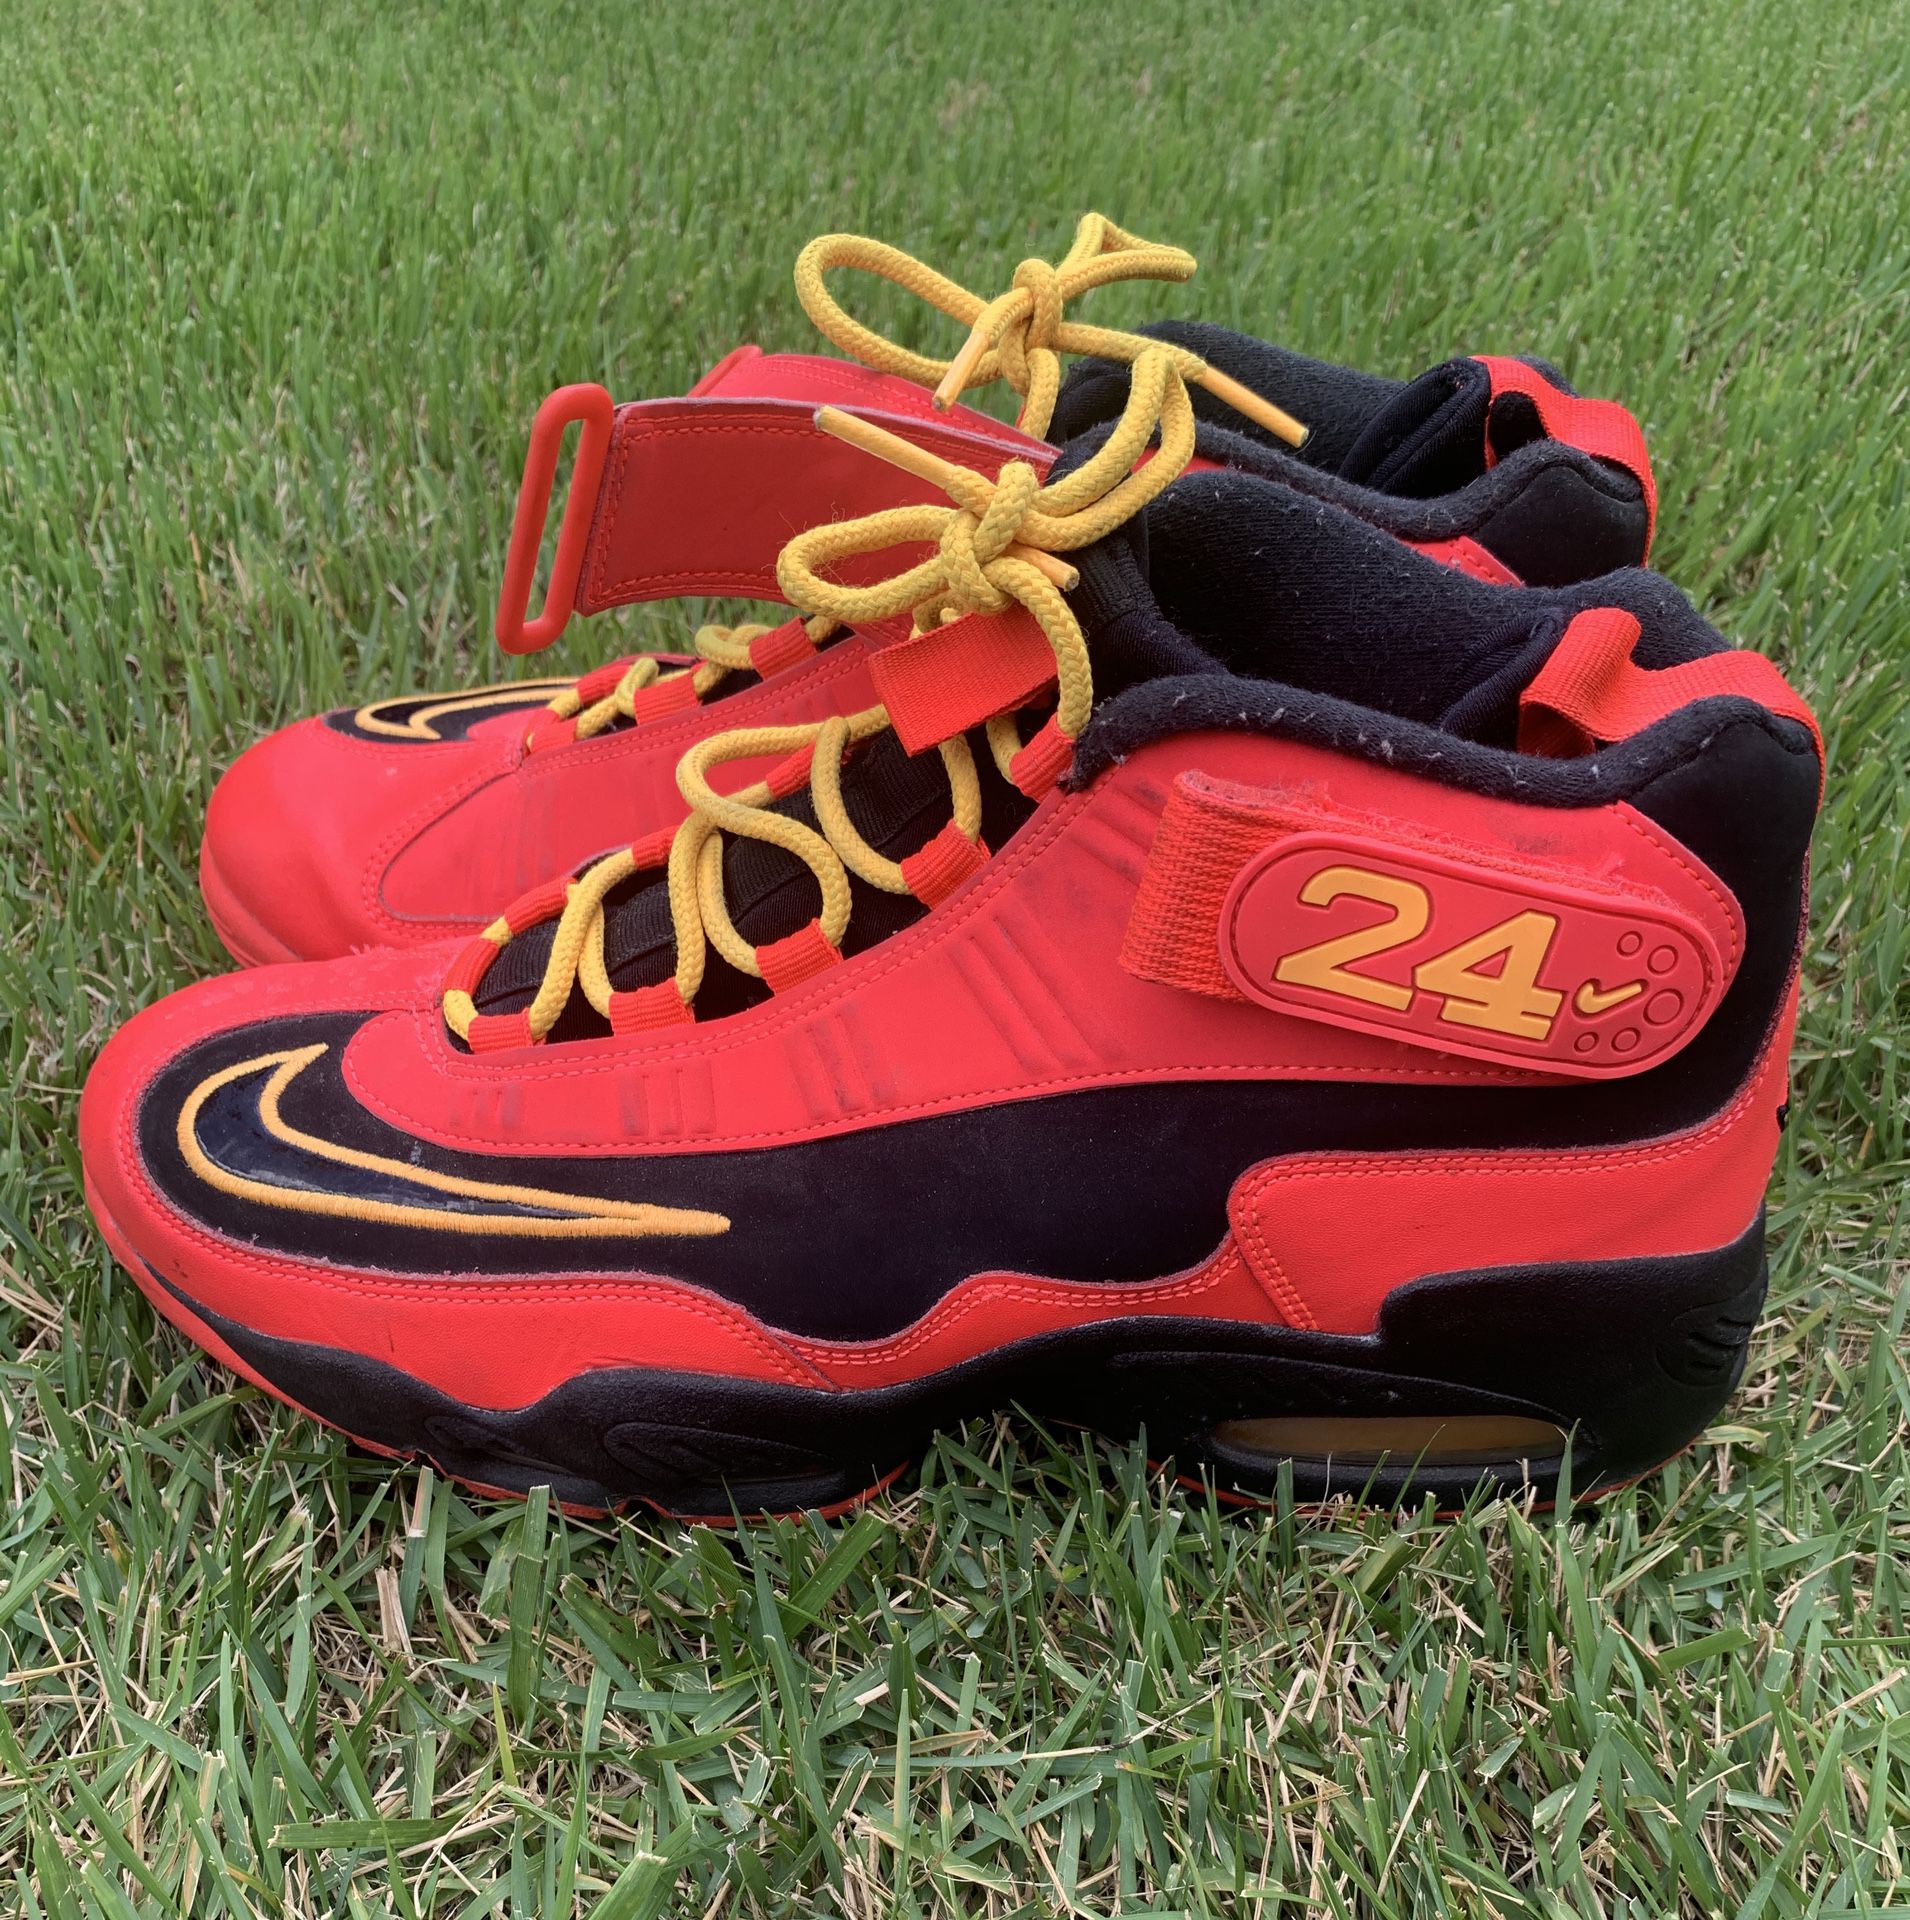 Nike Air Griffey Max 1 Crimson Atomic Mango Rare Colorway Men’s Sneakers Shoes Size 10